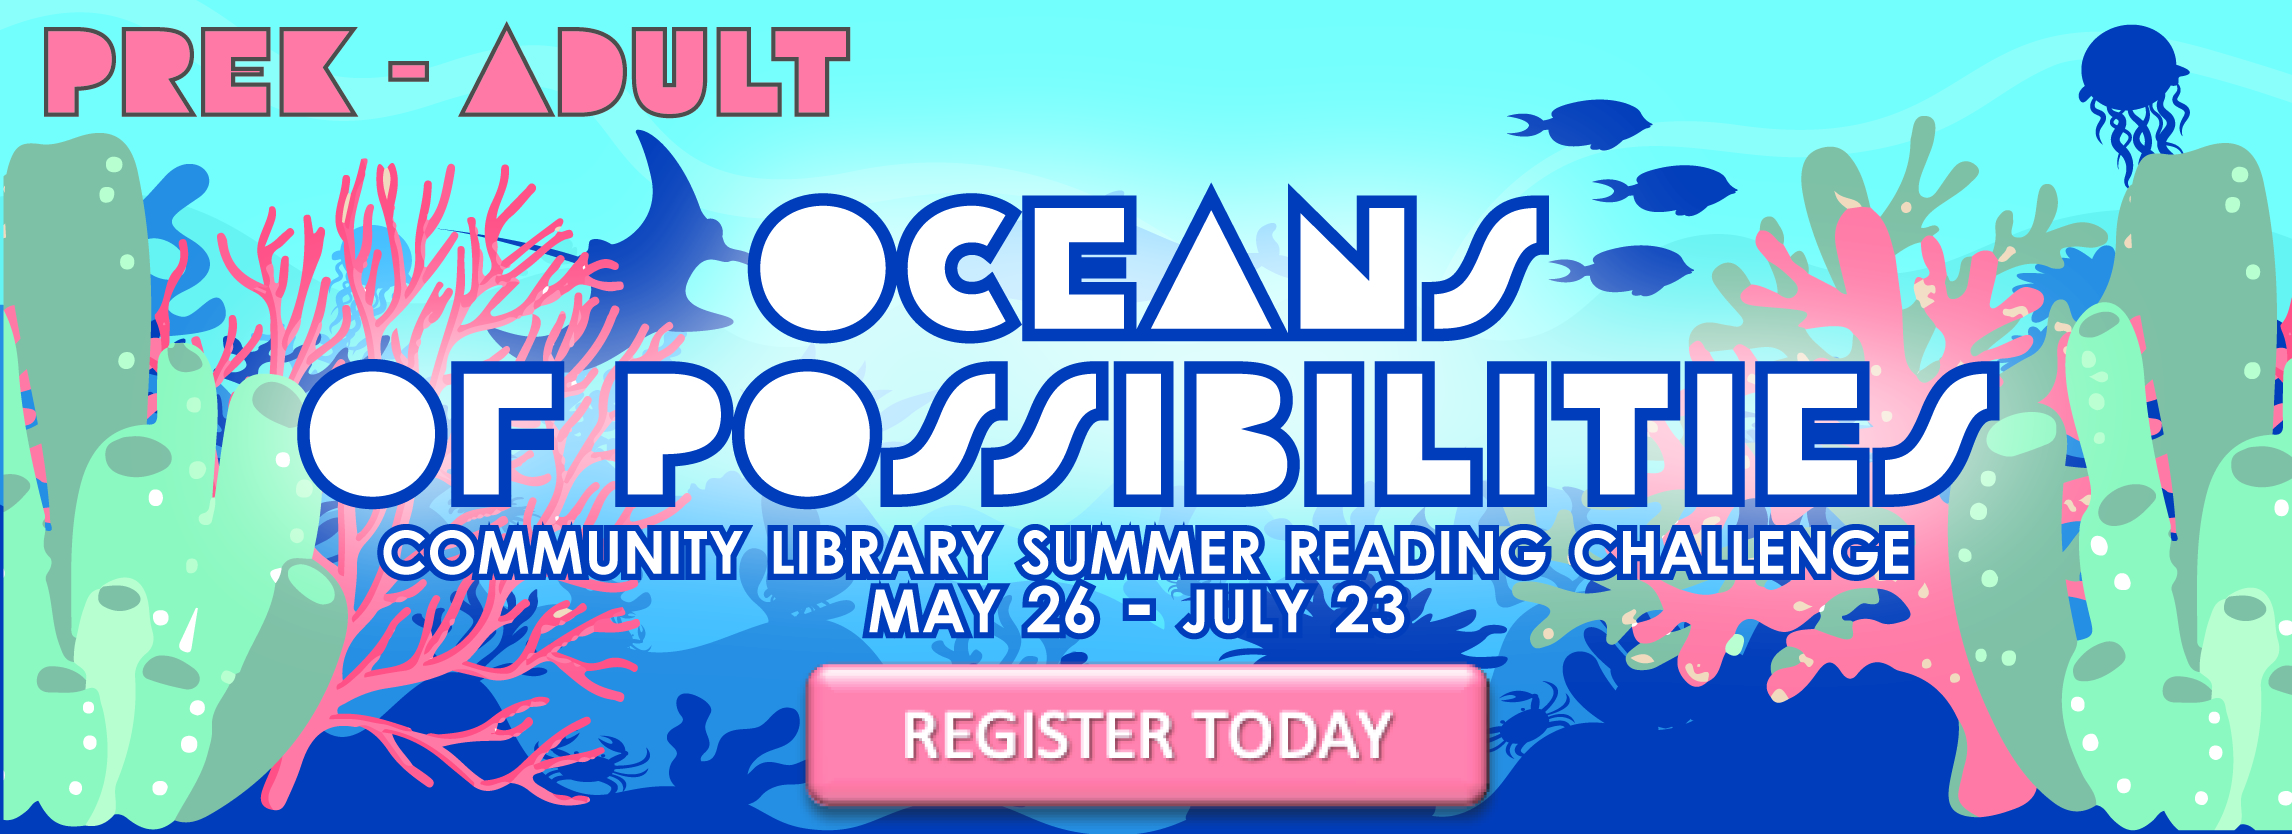 Oceans of Possibilities Summer Reading Challenge Register Today